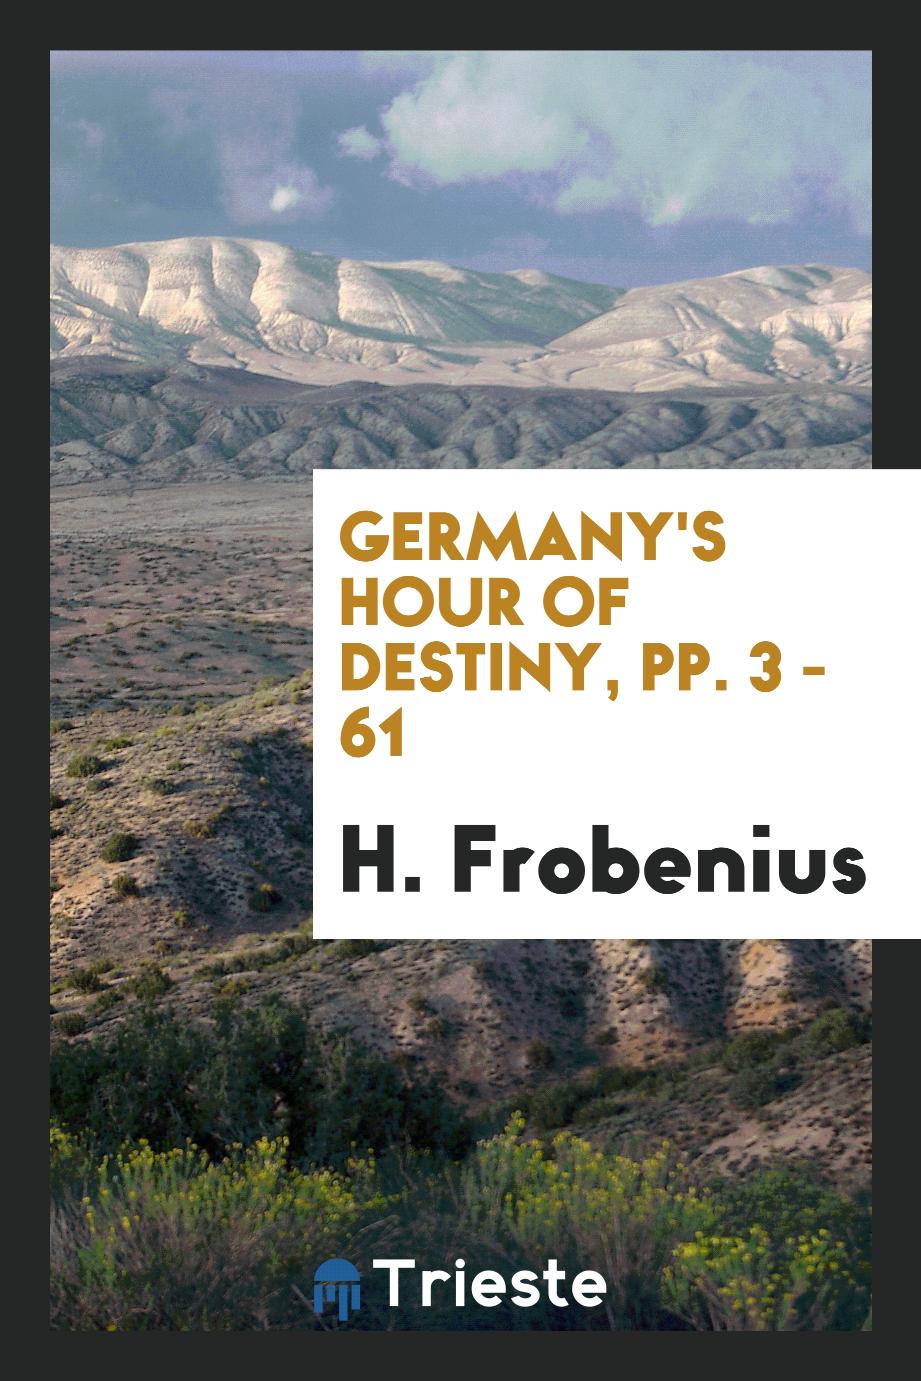 Germany's Hour of Destiny, pp. 3 - 61